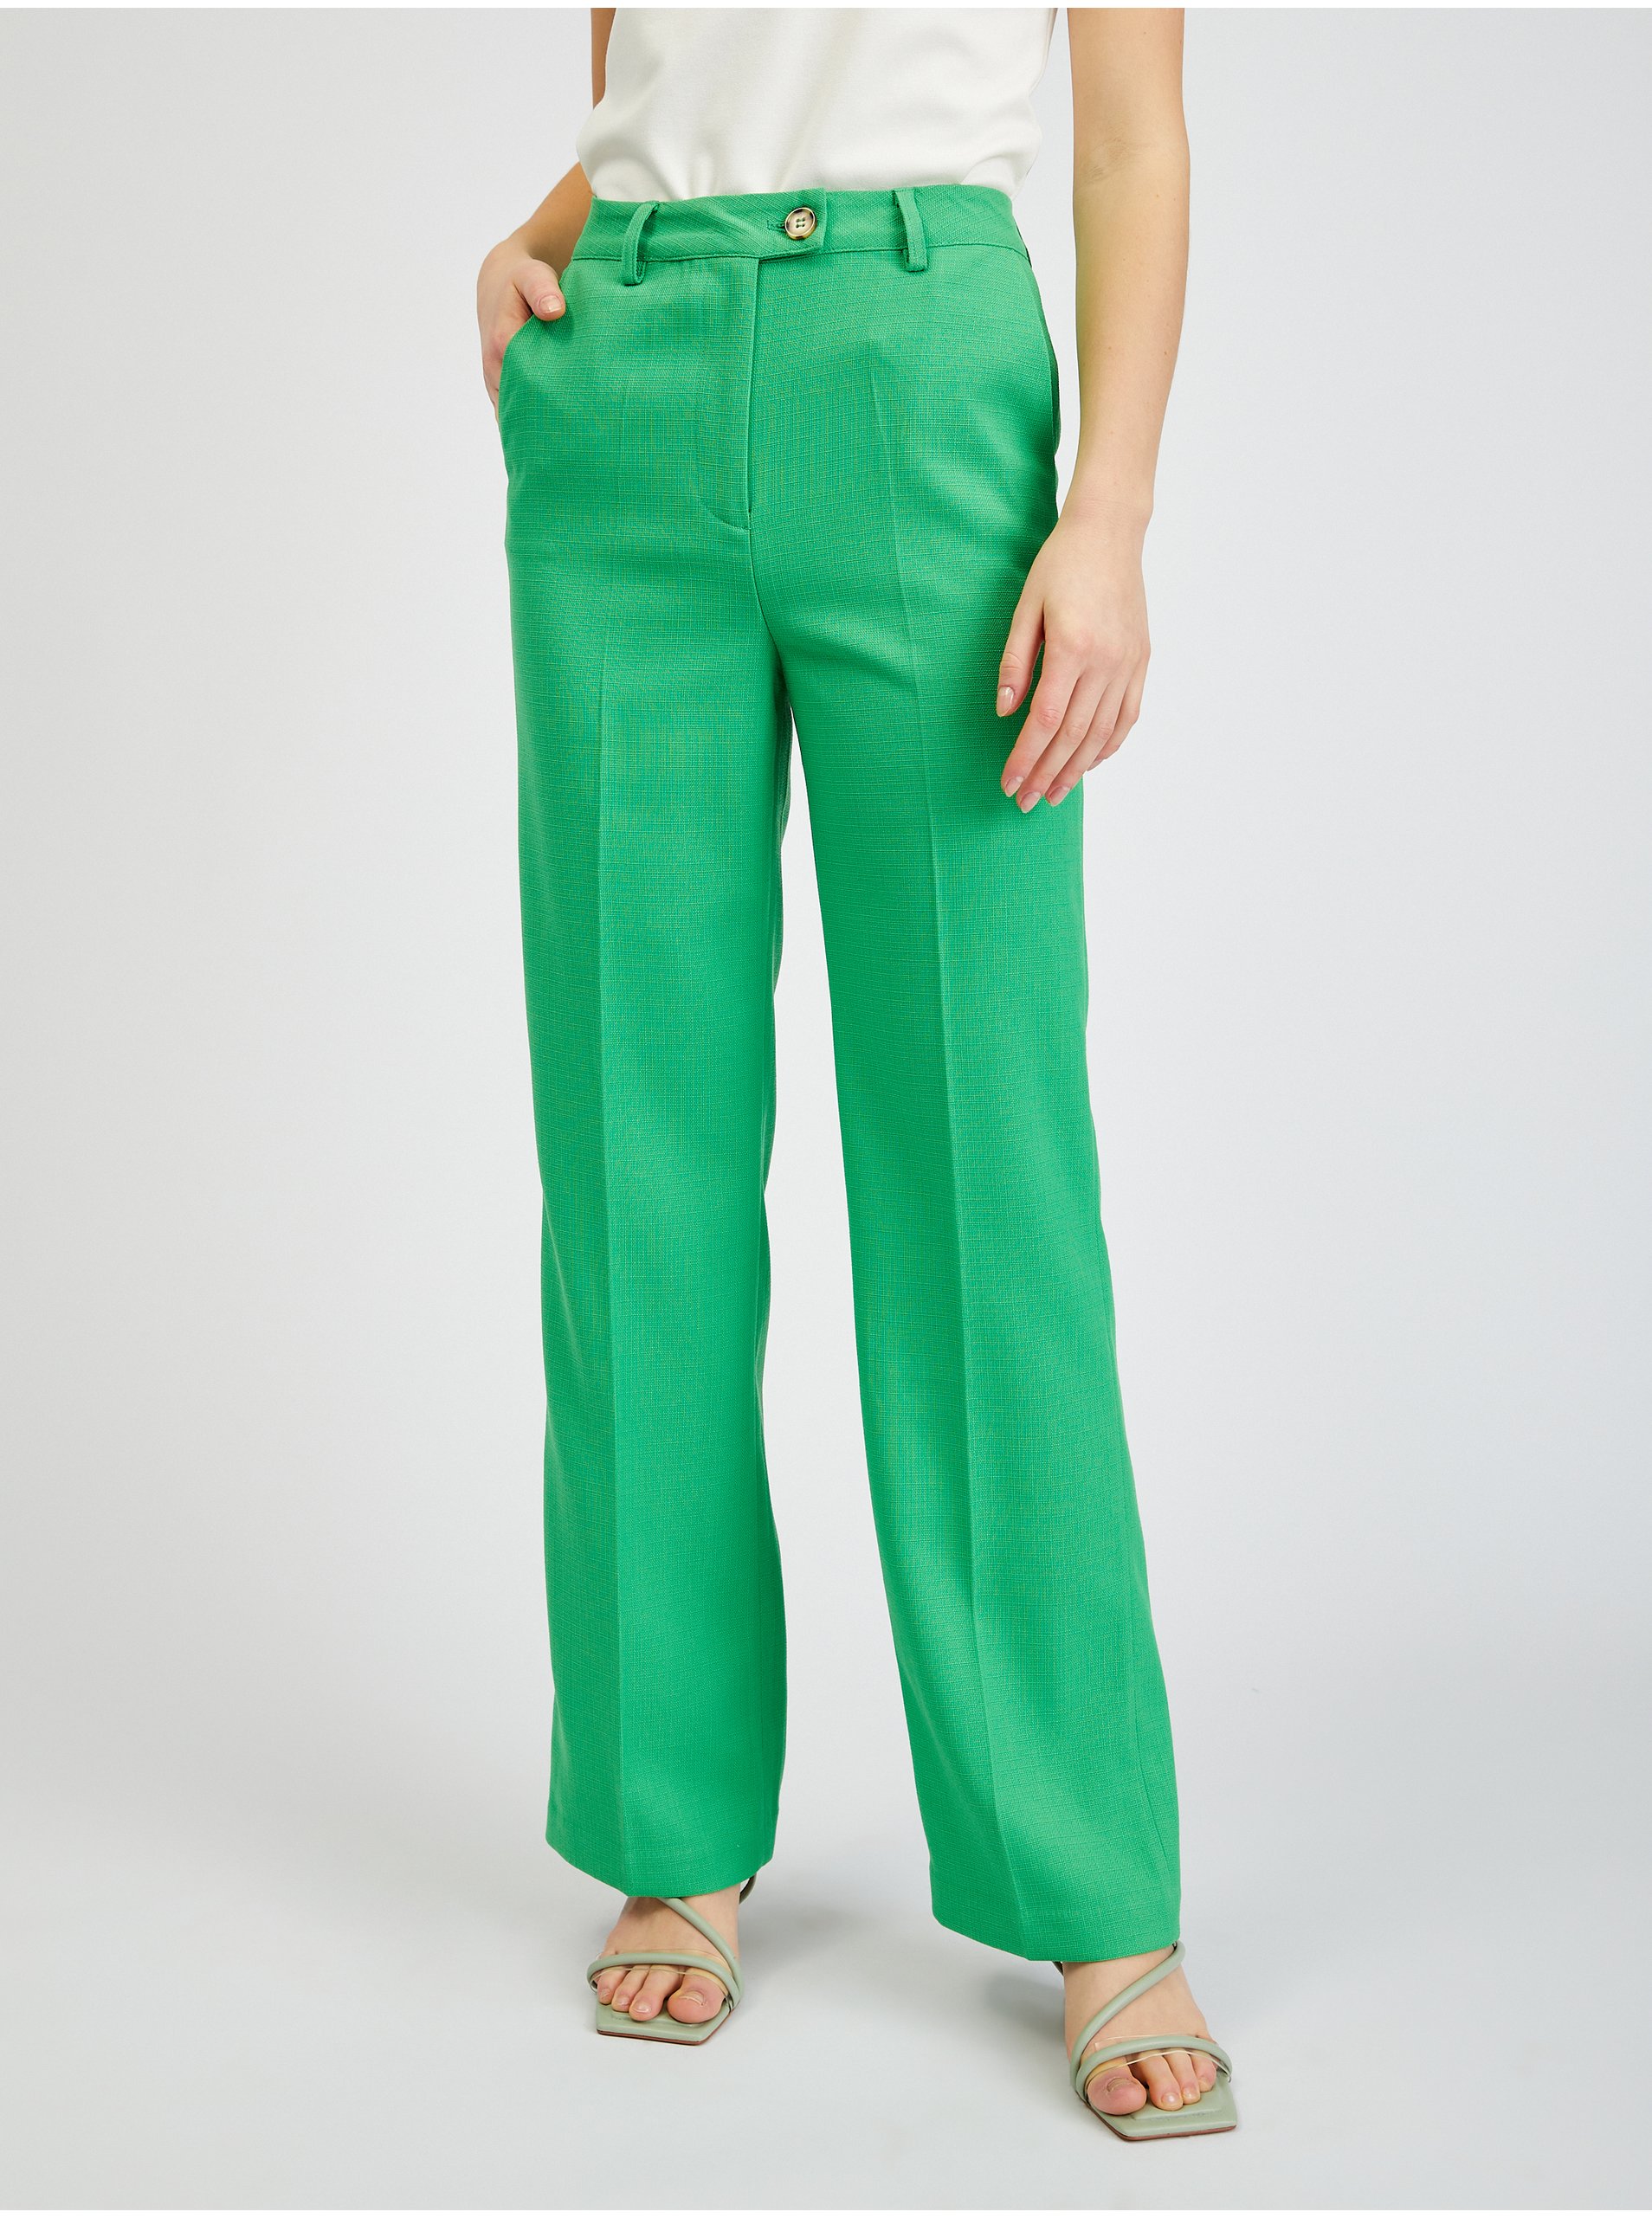 Lacno Elegantné nohavice pre ženy ORSAY - zelená